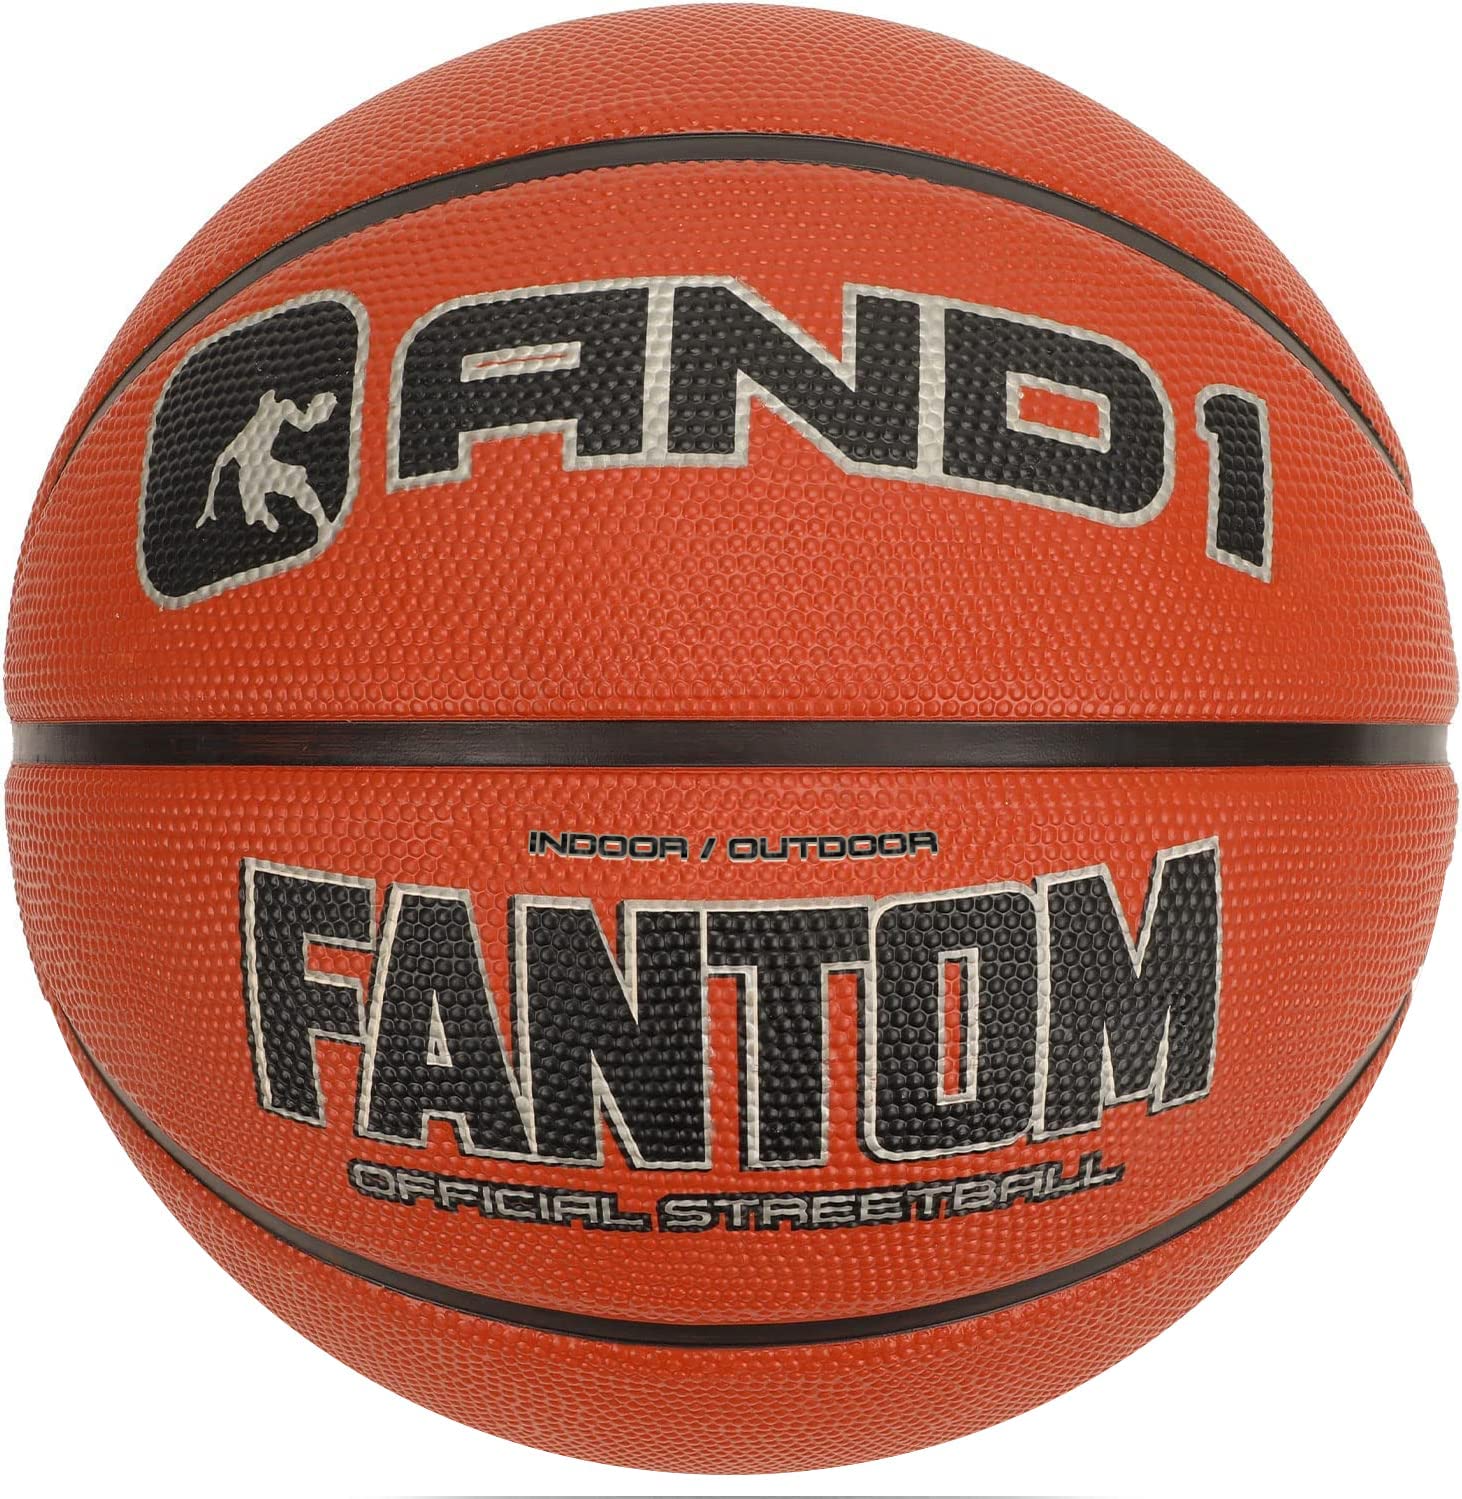 AND1 29.5" Fantom Full Size Rubber Basketball (Orange) $5 + Free Shipping w/ Prime